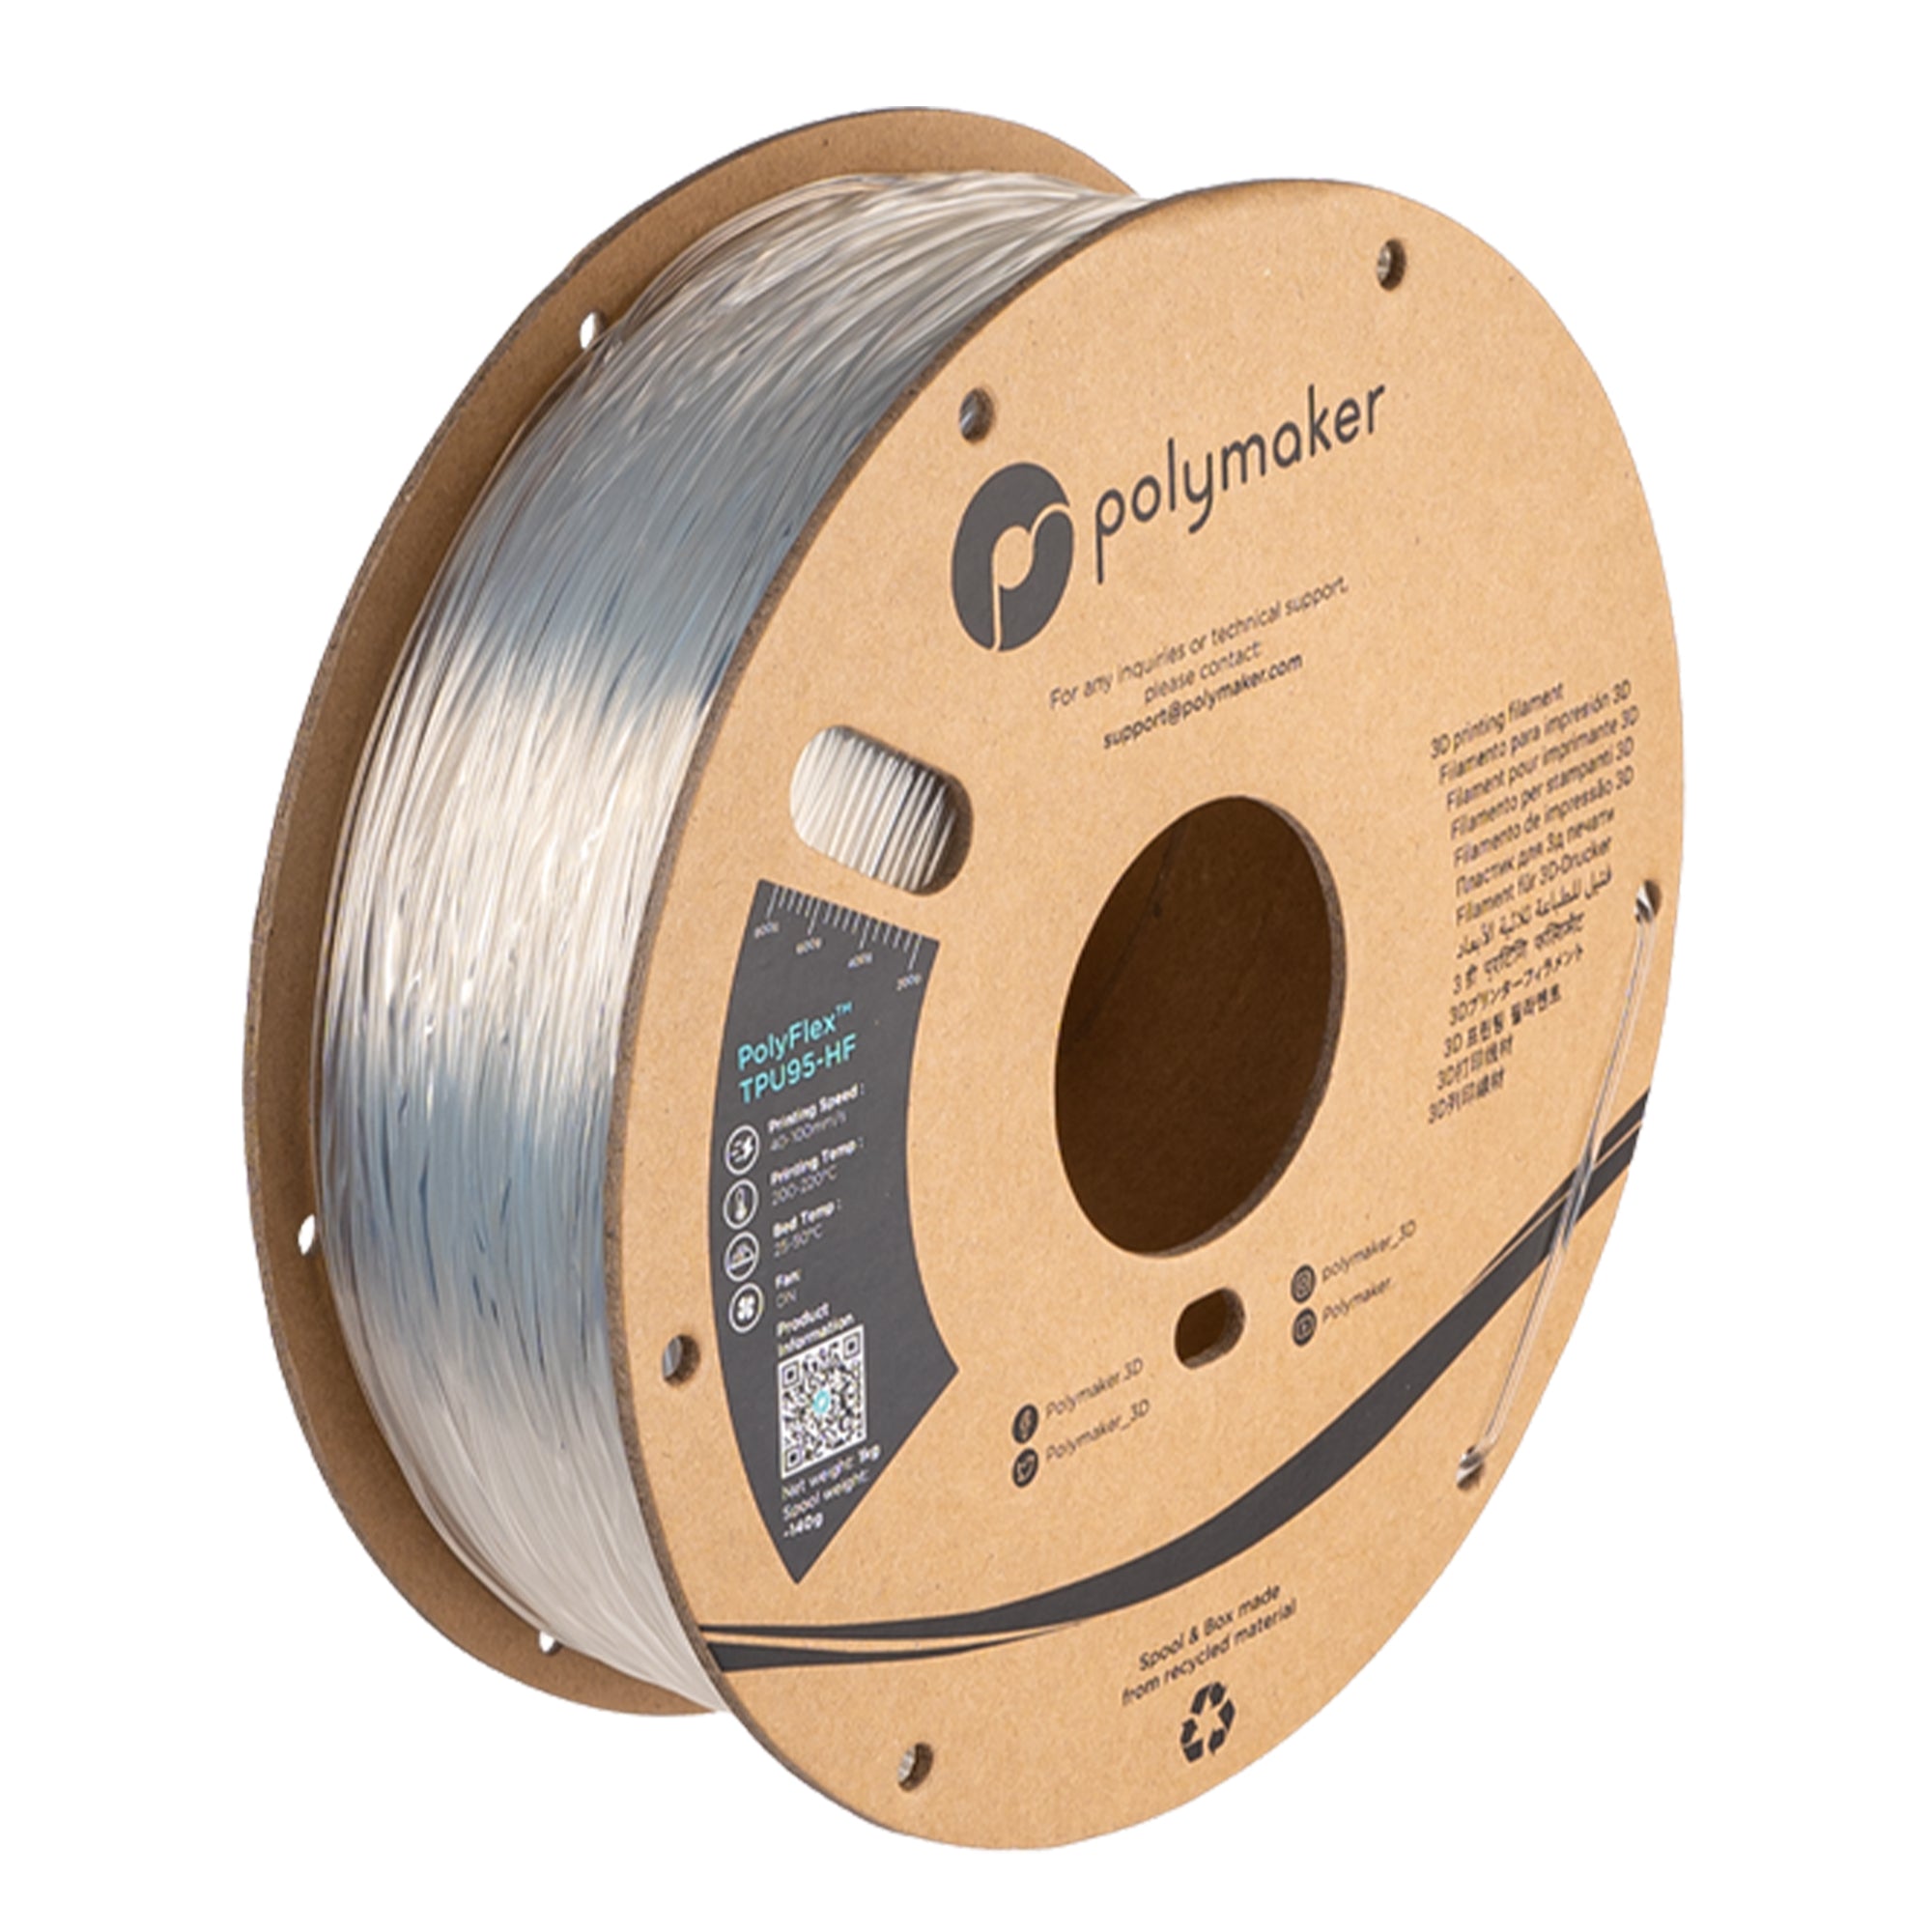 Polymaker Polyflex TPU95 High Flow Filament 1.75mm 1kg